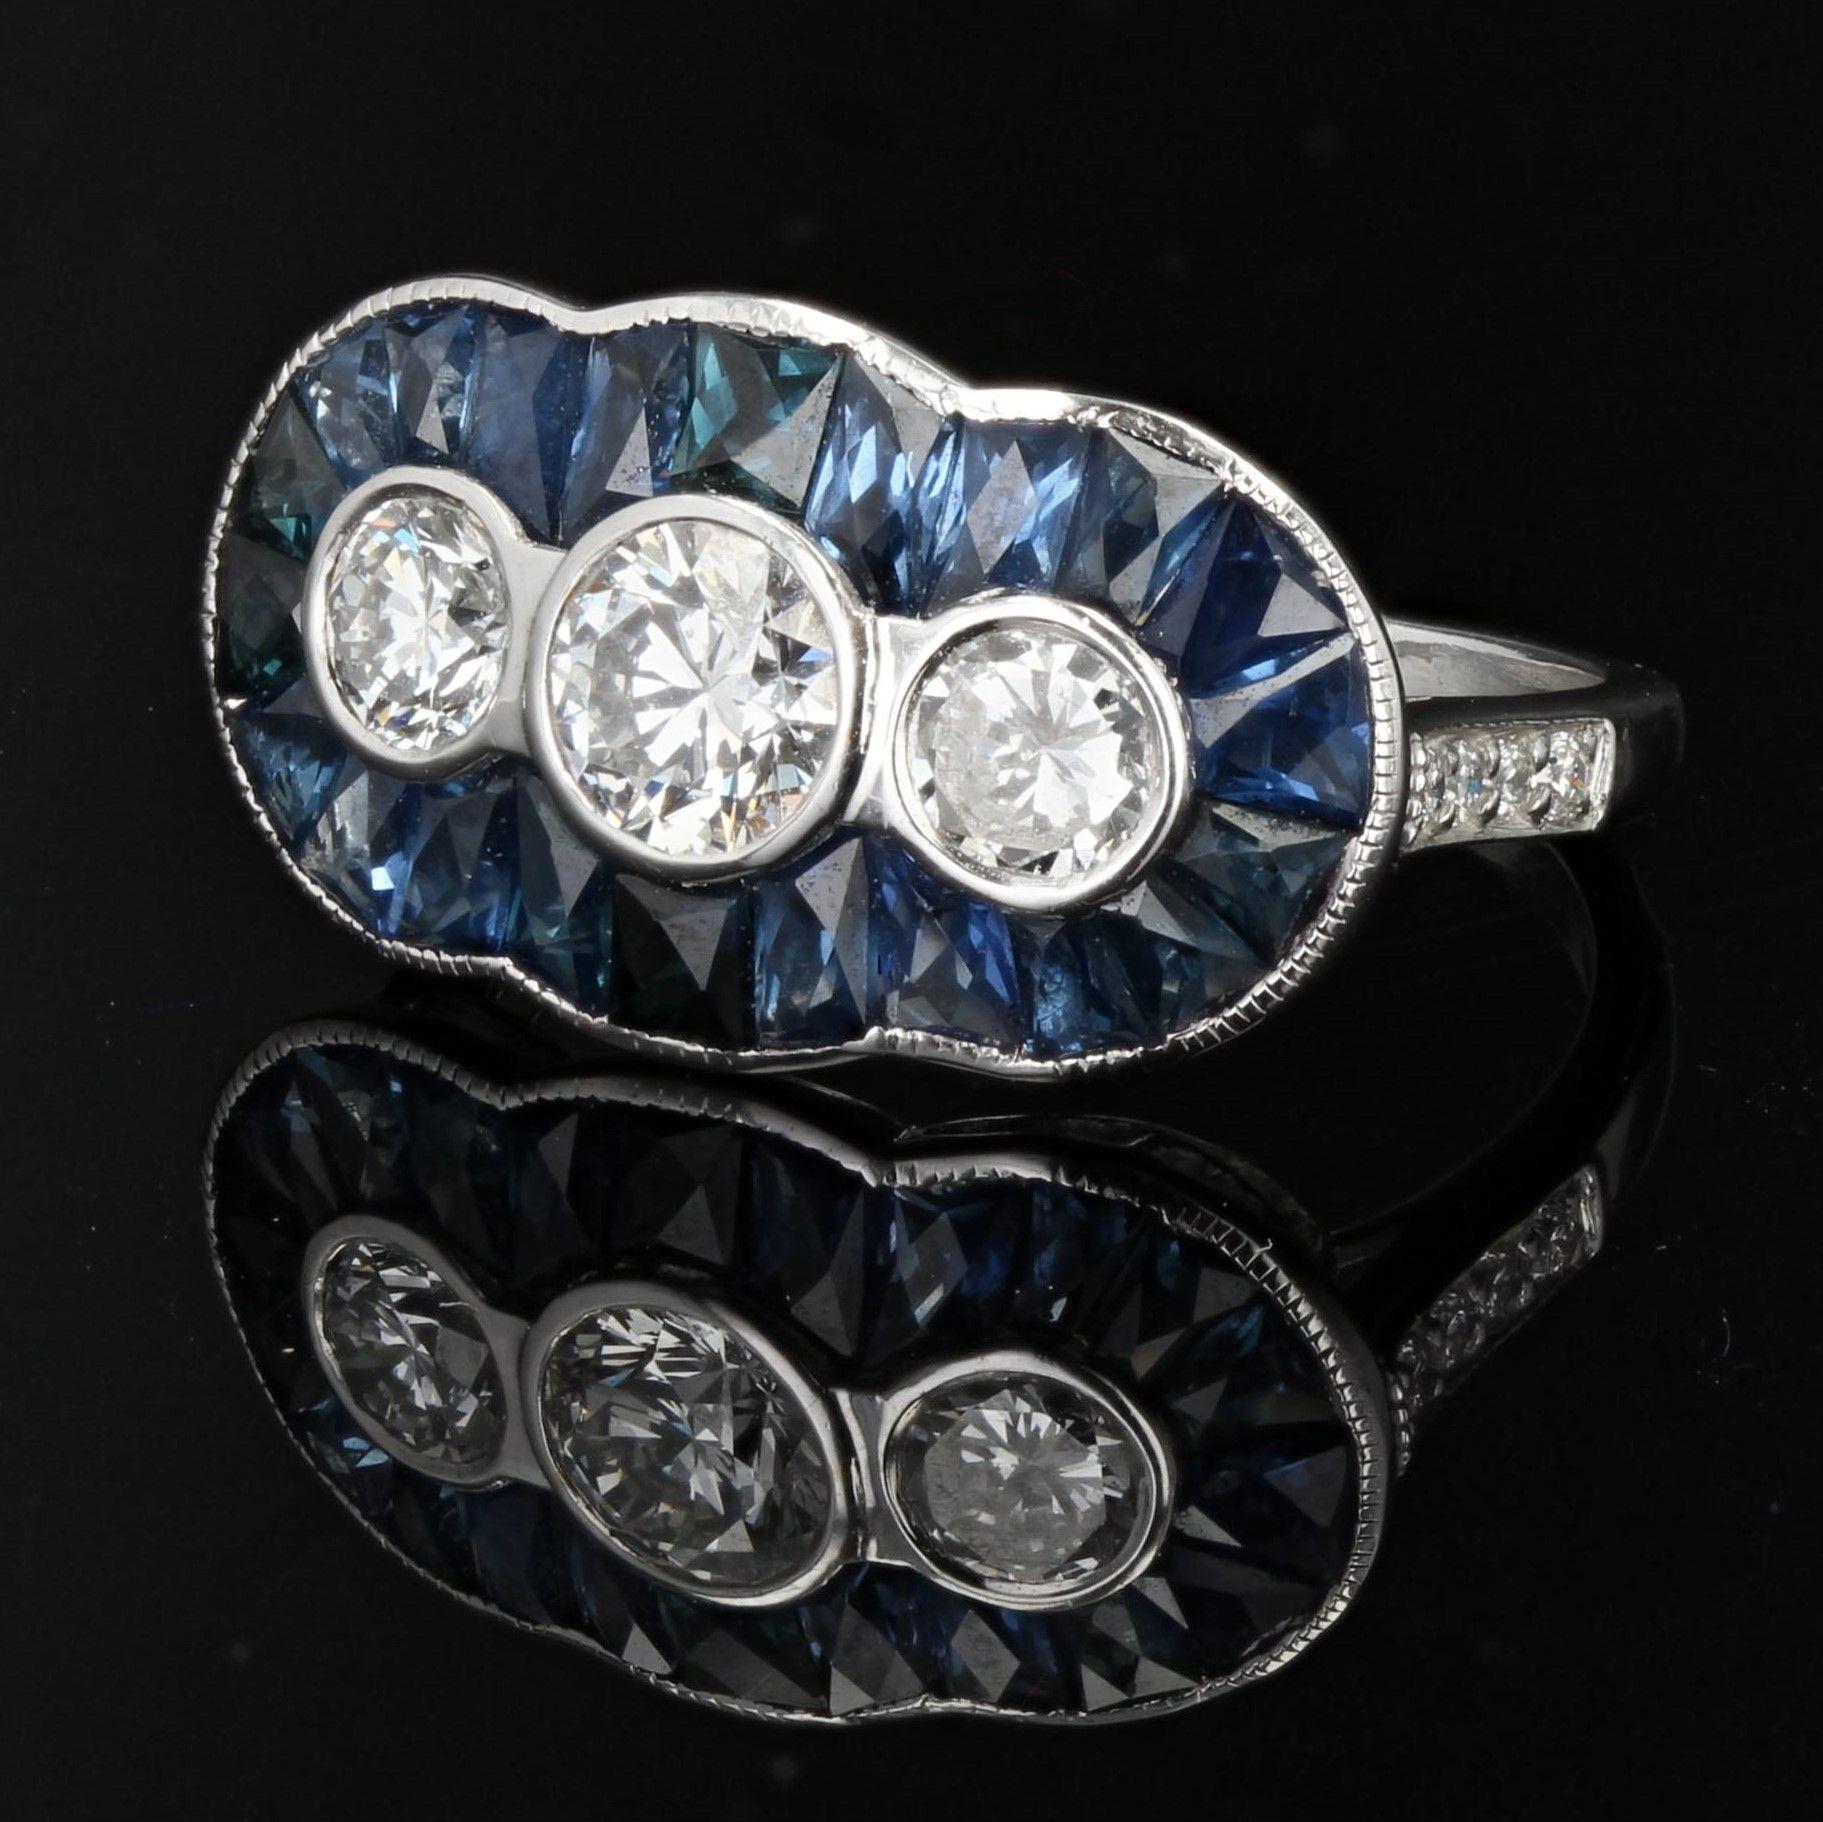 Brilliant Cut Art Deco Style Calibrated Sapphire Diamonds 18 Karat White Gold Ring For Sale